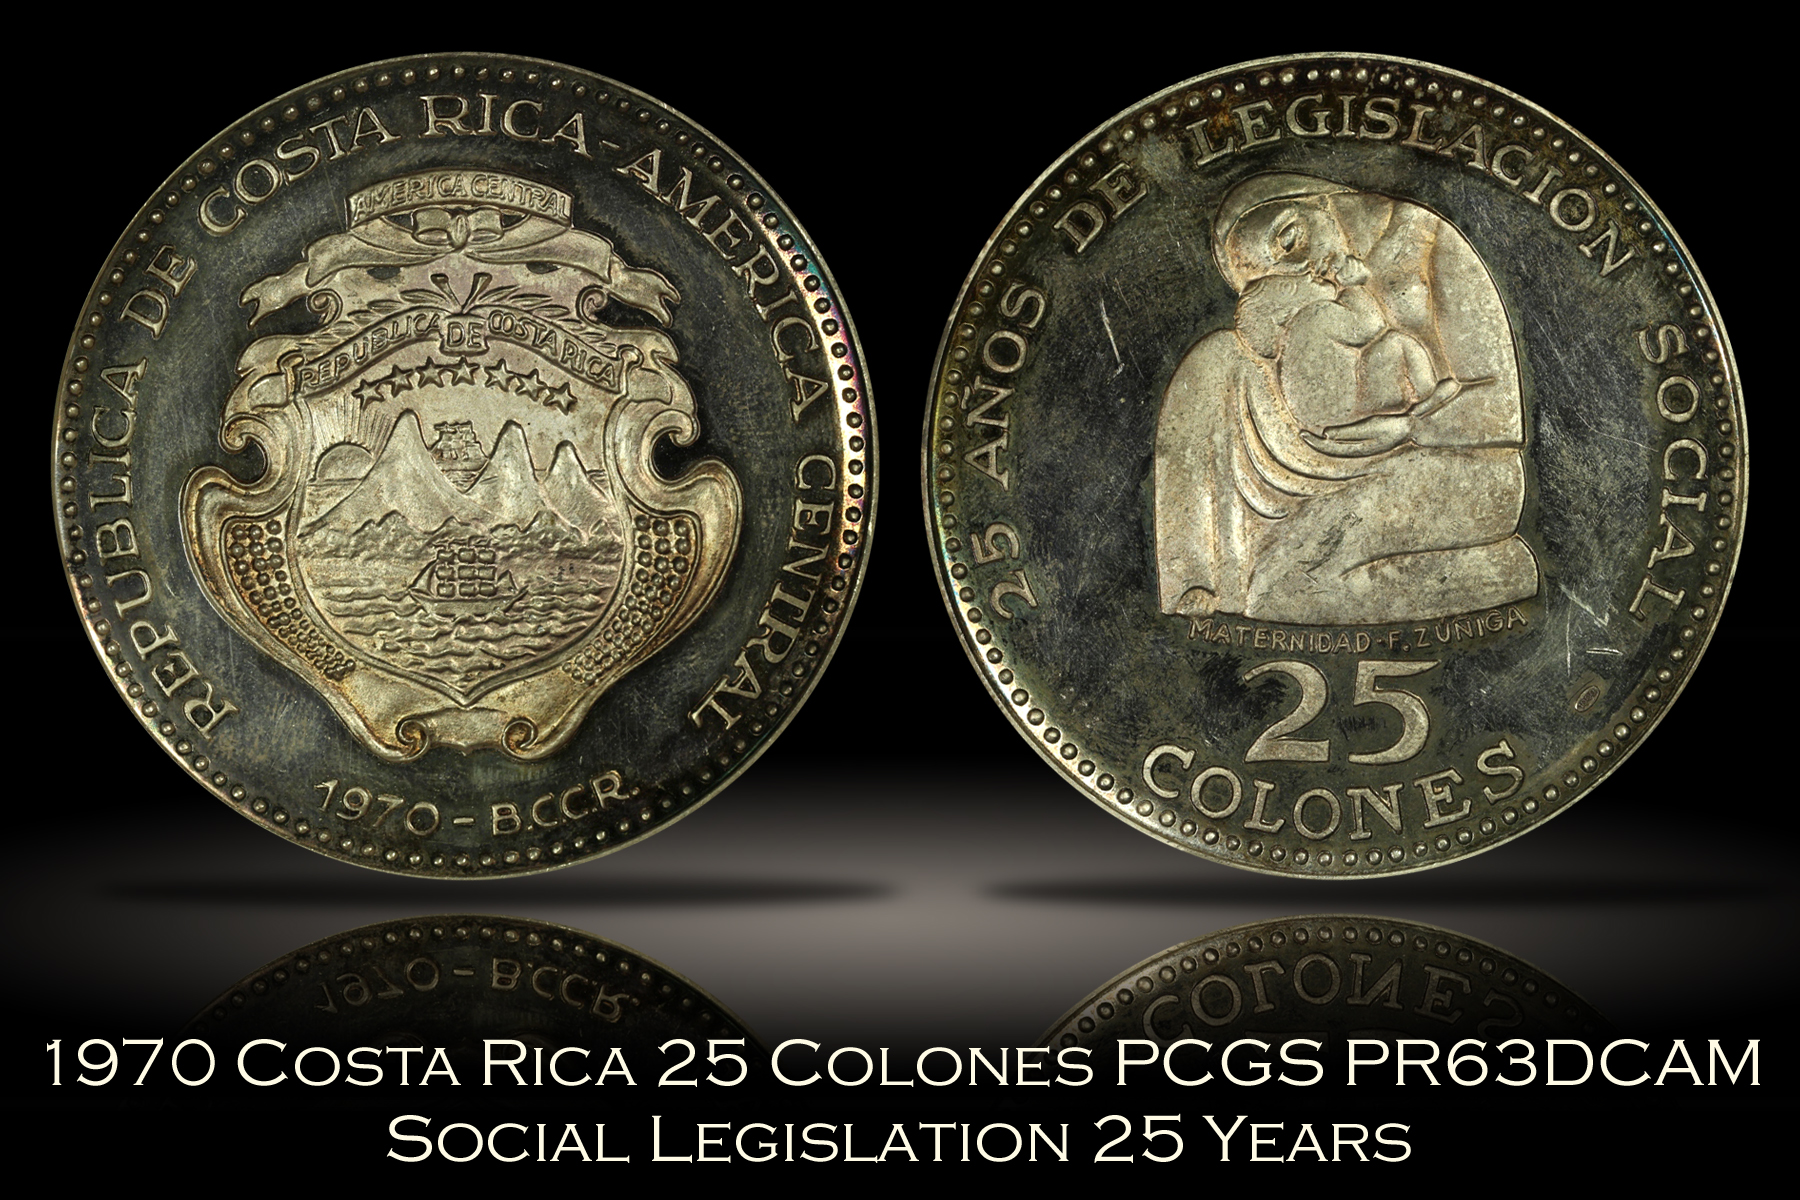 1970 Costa Rica 25 Colones Social Legislation PCGS PR63DCAM